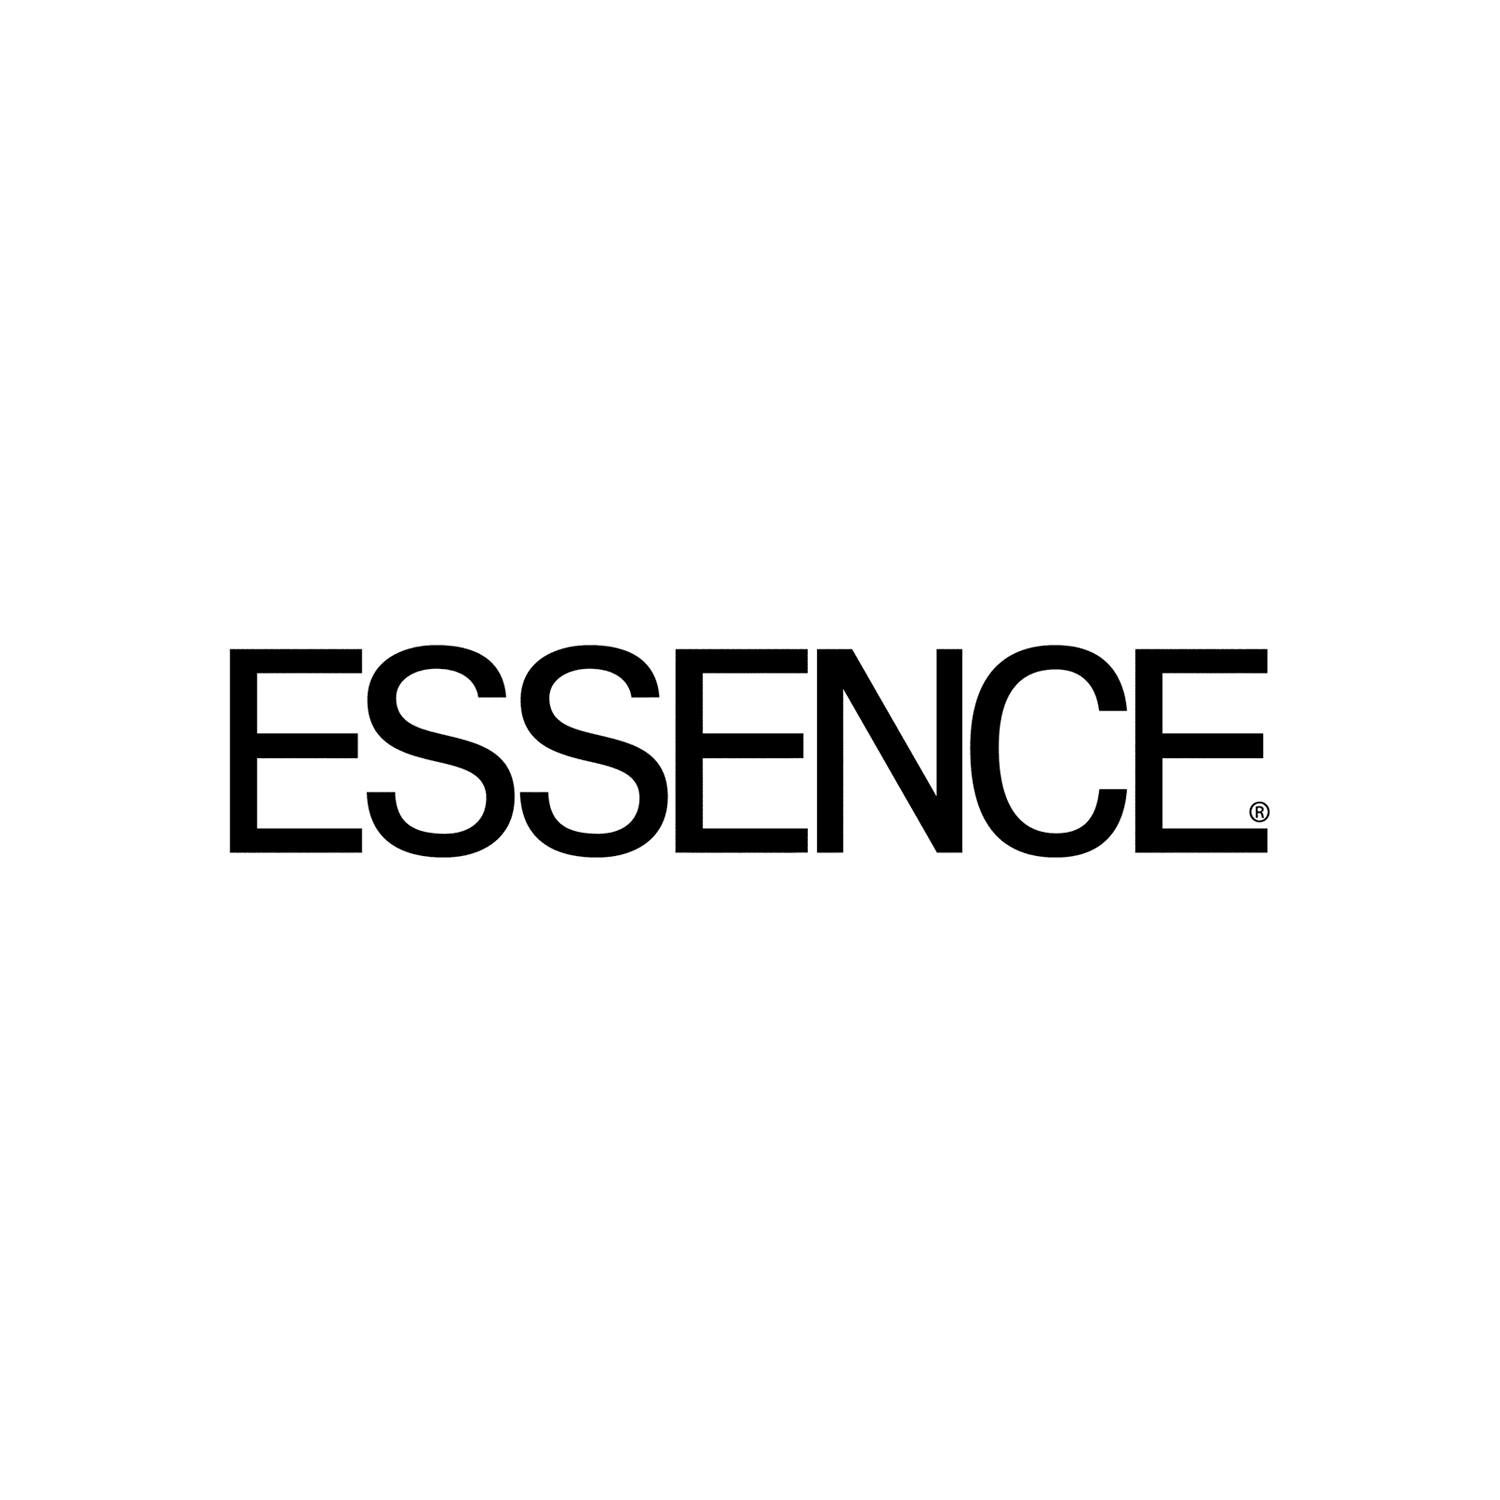 essence_logo_final.png